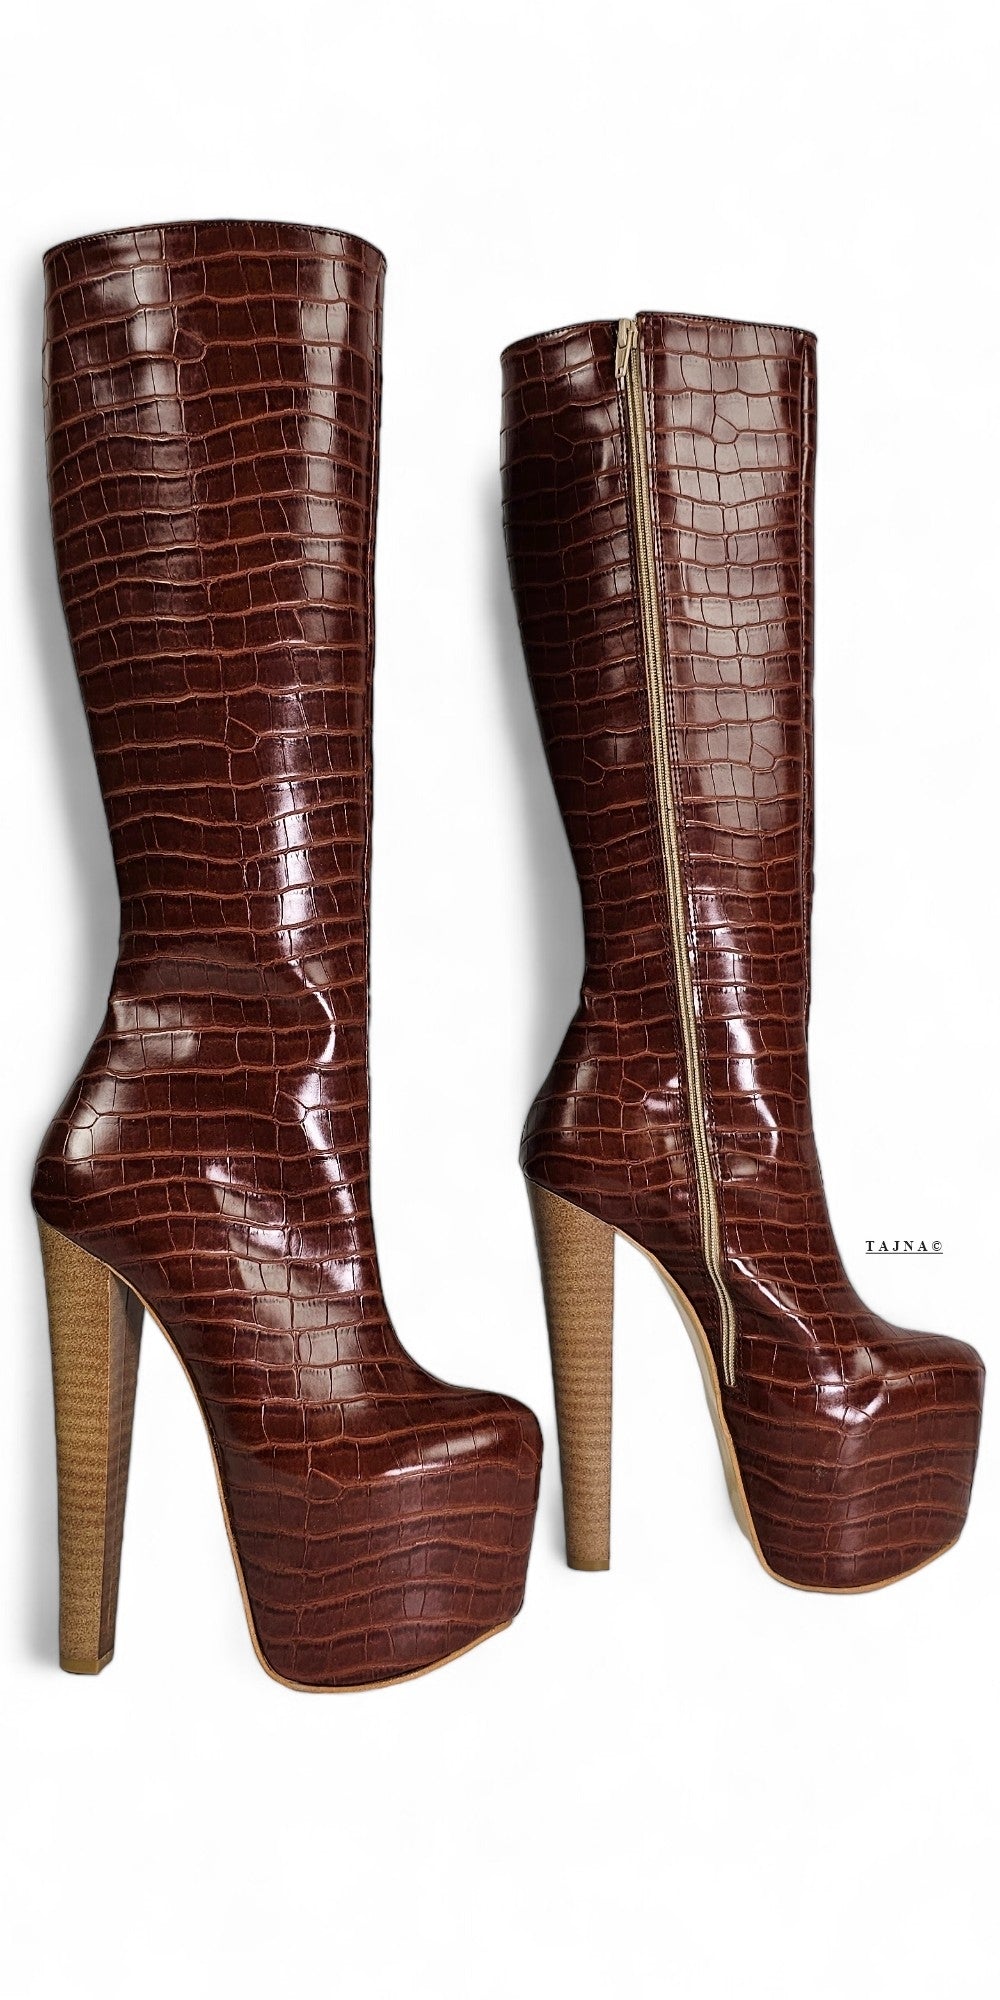 tajna-club-shoes-knee-high-midcalf-high-heel-brown-croco-print-platform-boots